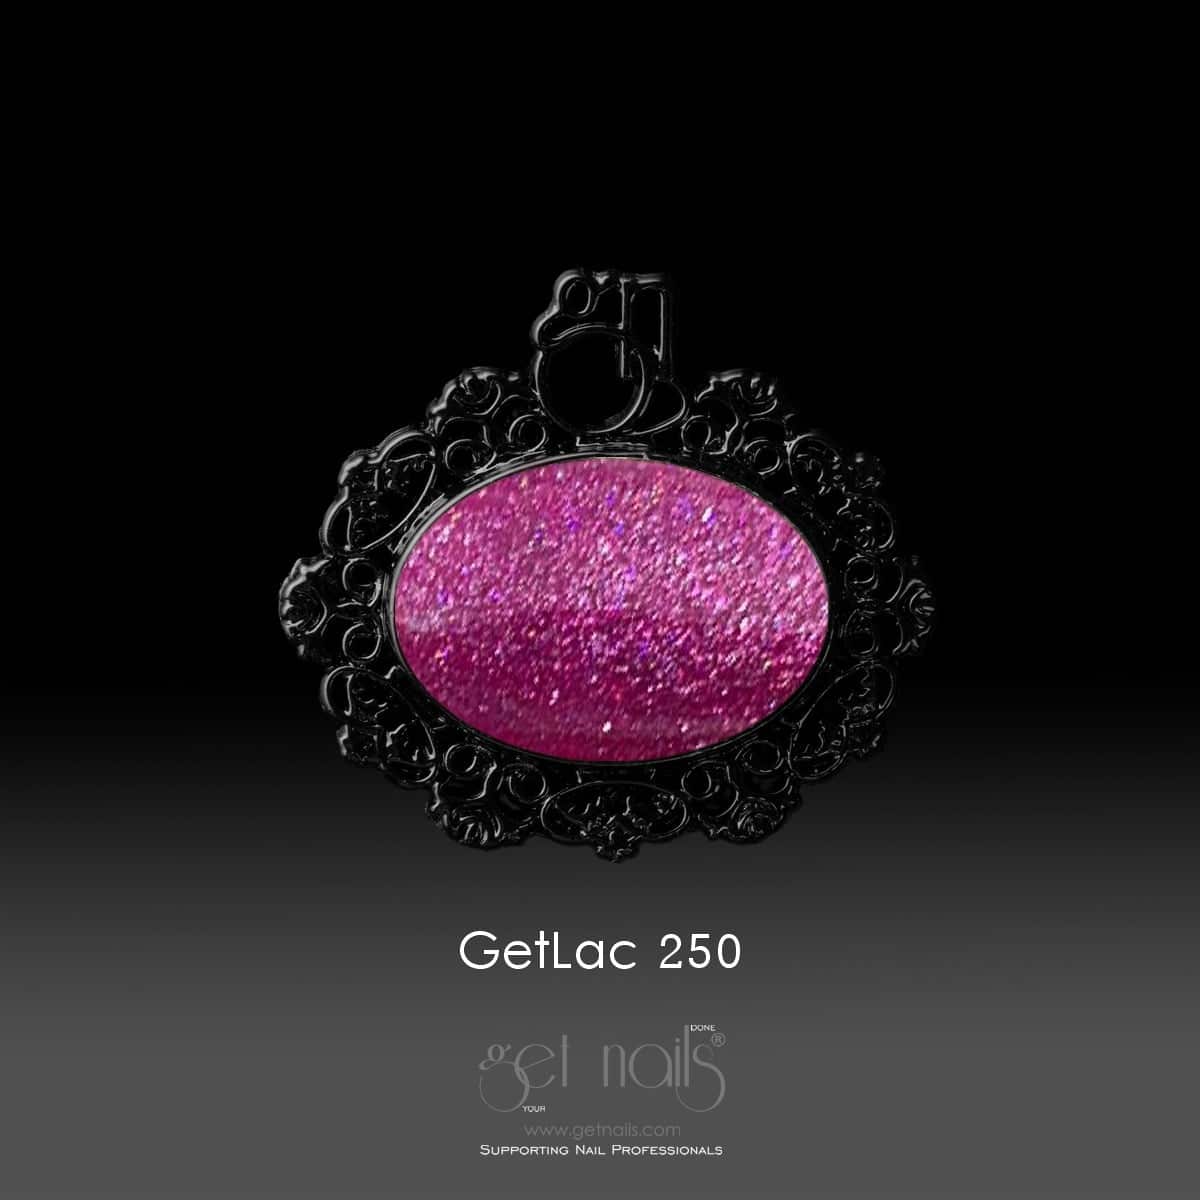 Get Nails Austria - GetLac 250 15g